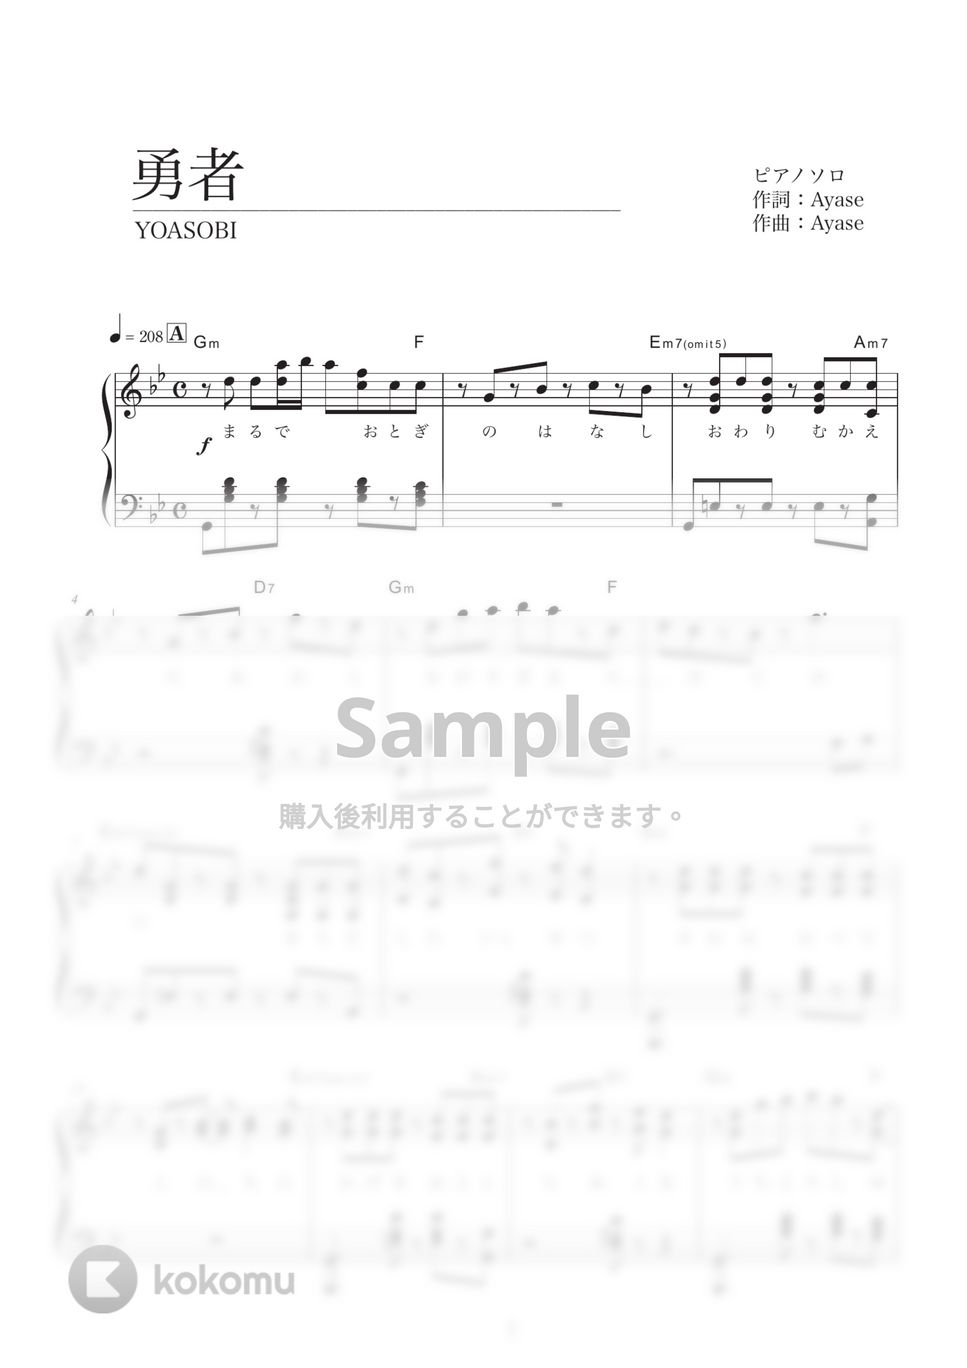 YOASOBI - 勇者 by HARU KOBA